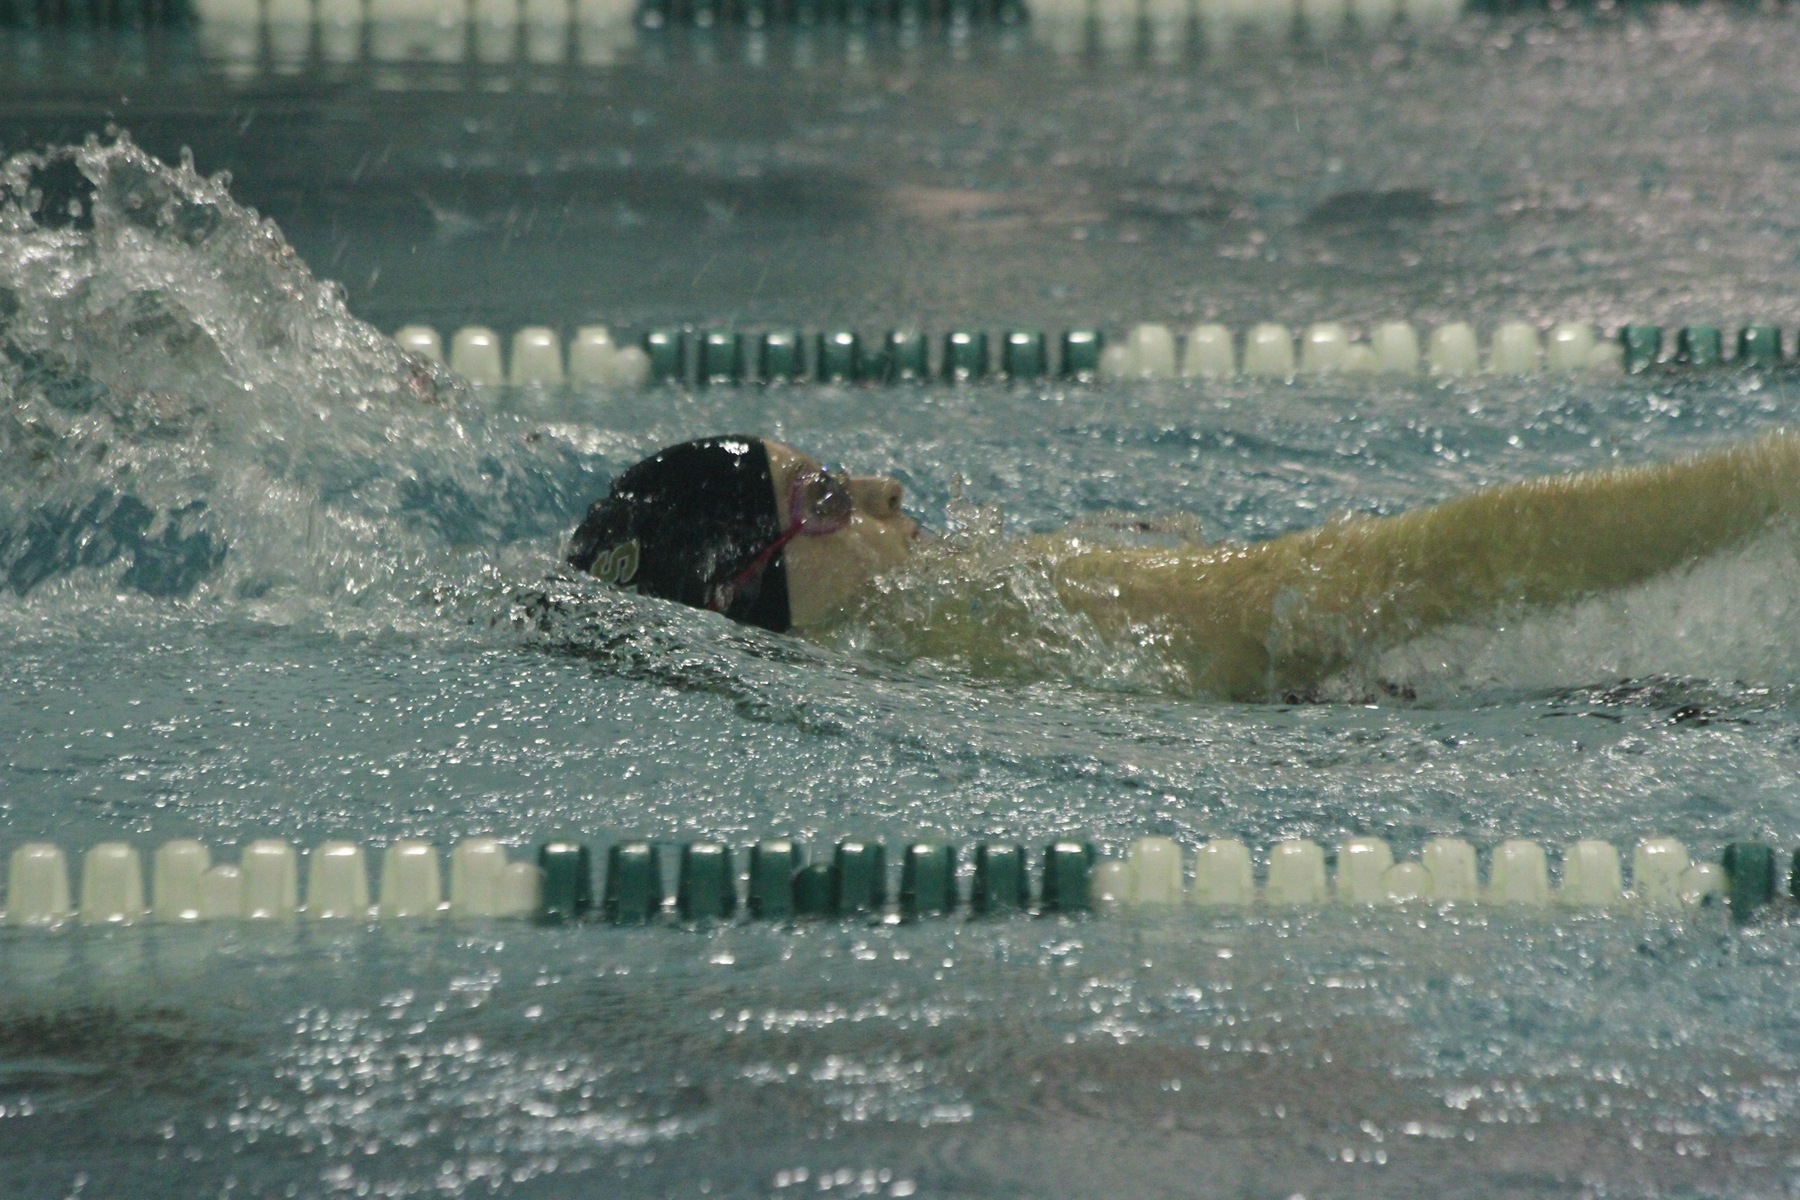 Swimming Sets 10 School Records At NEISDA Championships